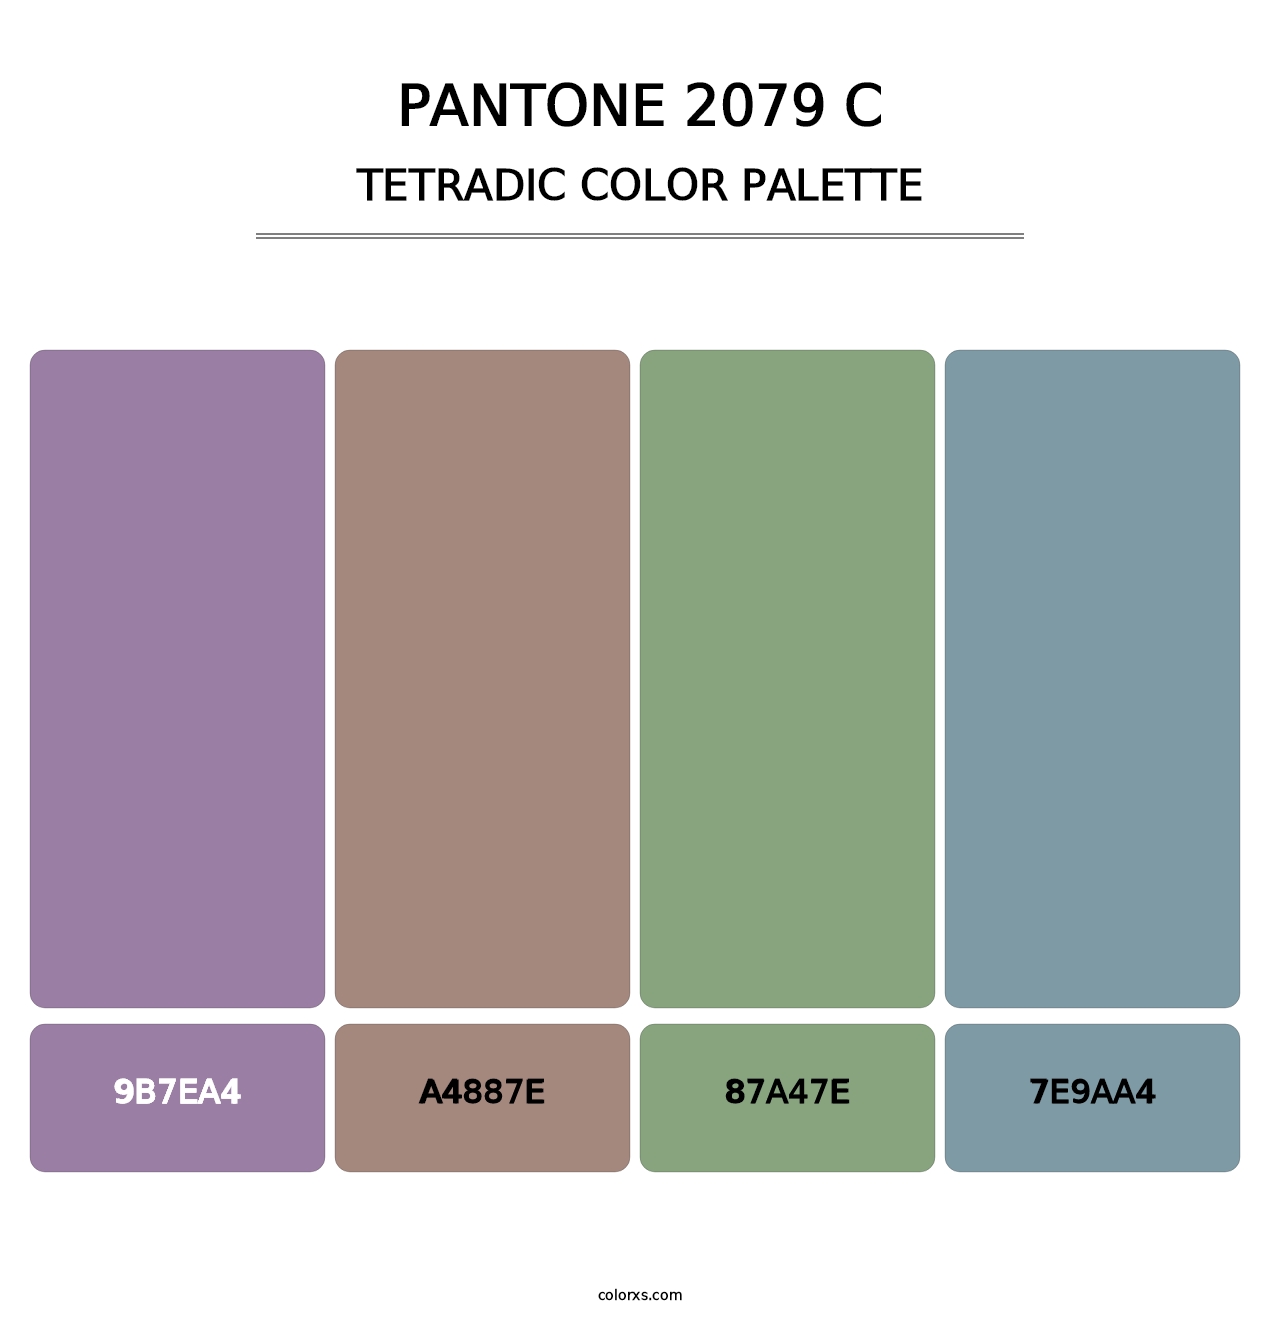 PANTONE 2079 C - Tetradic Color Palette